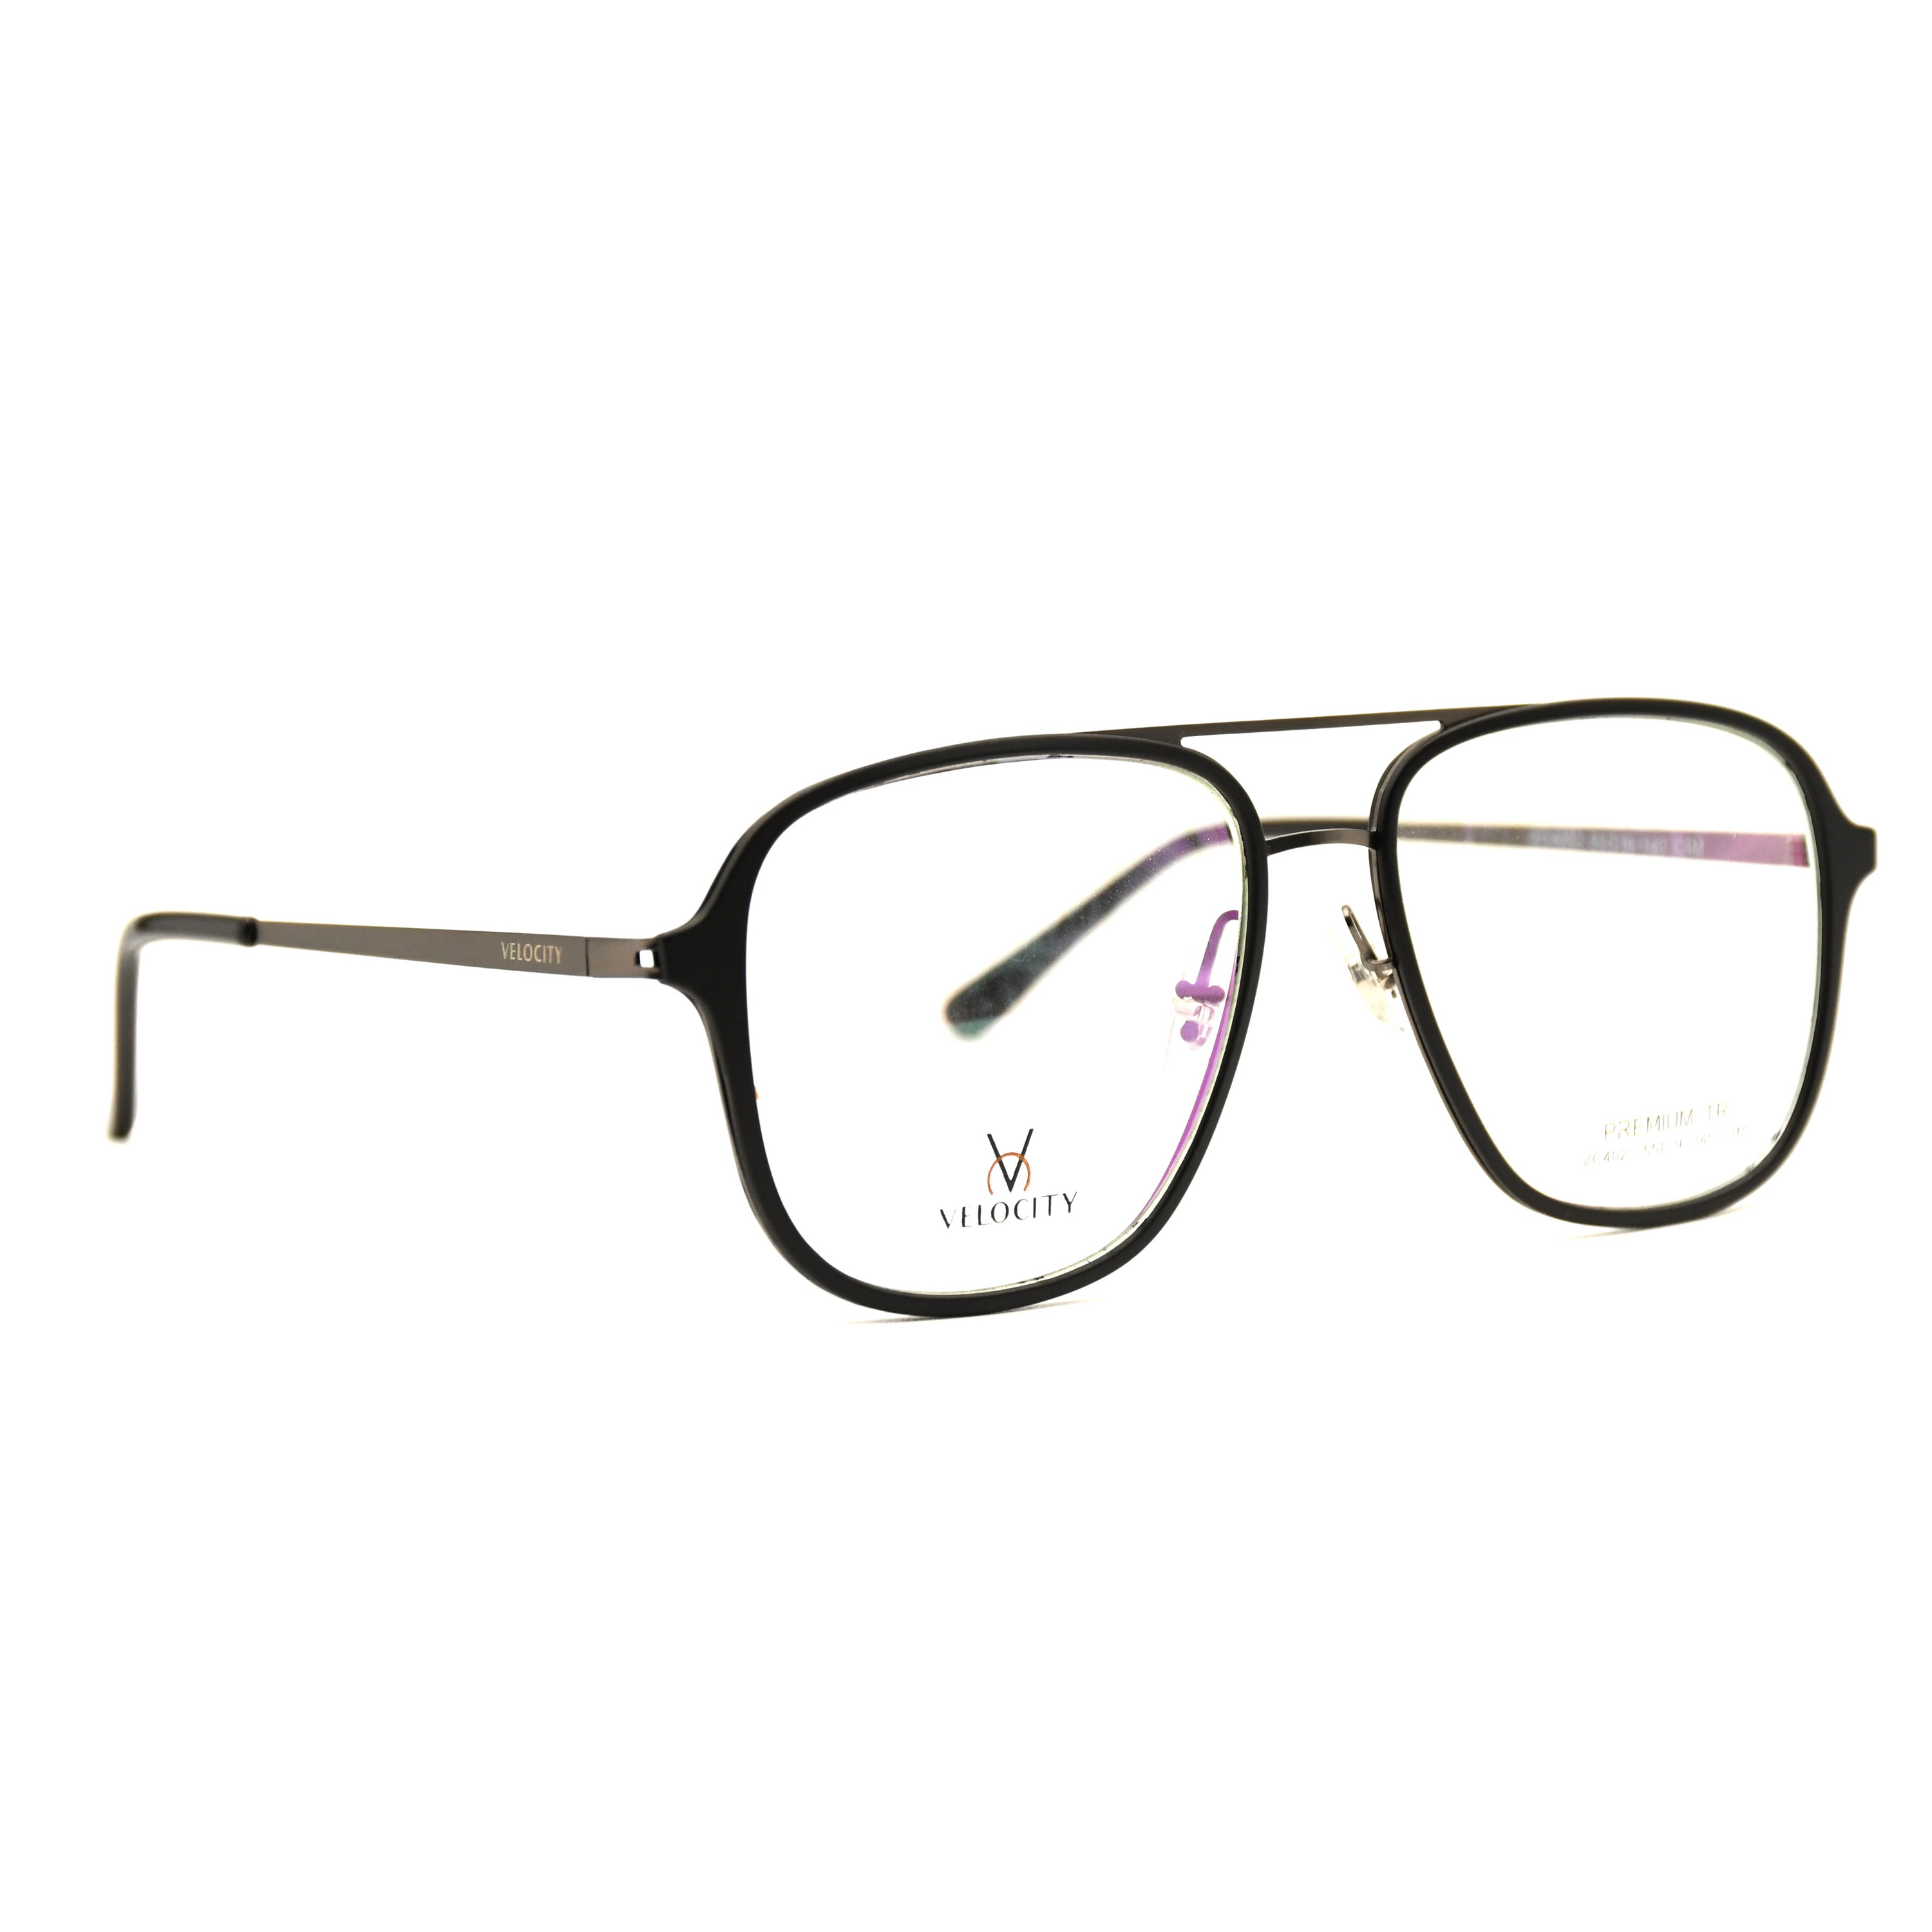 Velocity Rectangle Full Rim Metal Eyeglasses - 4022-C1M